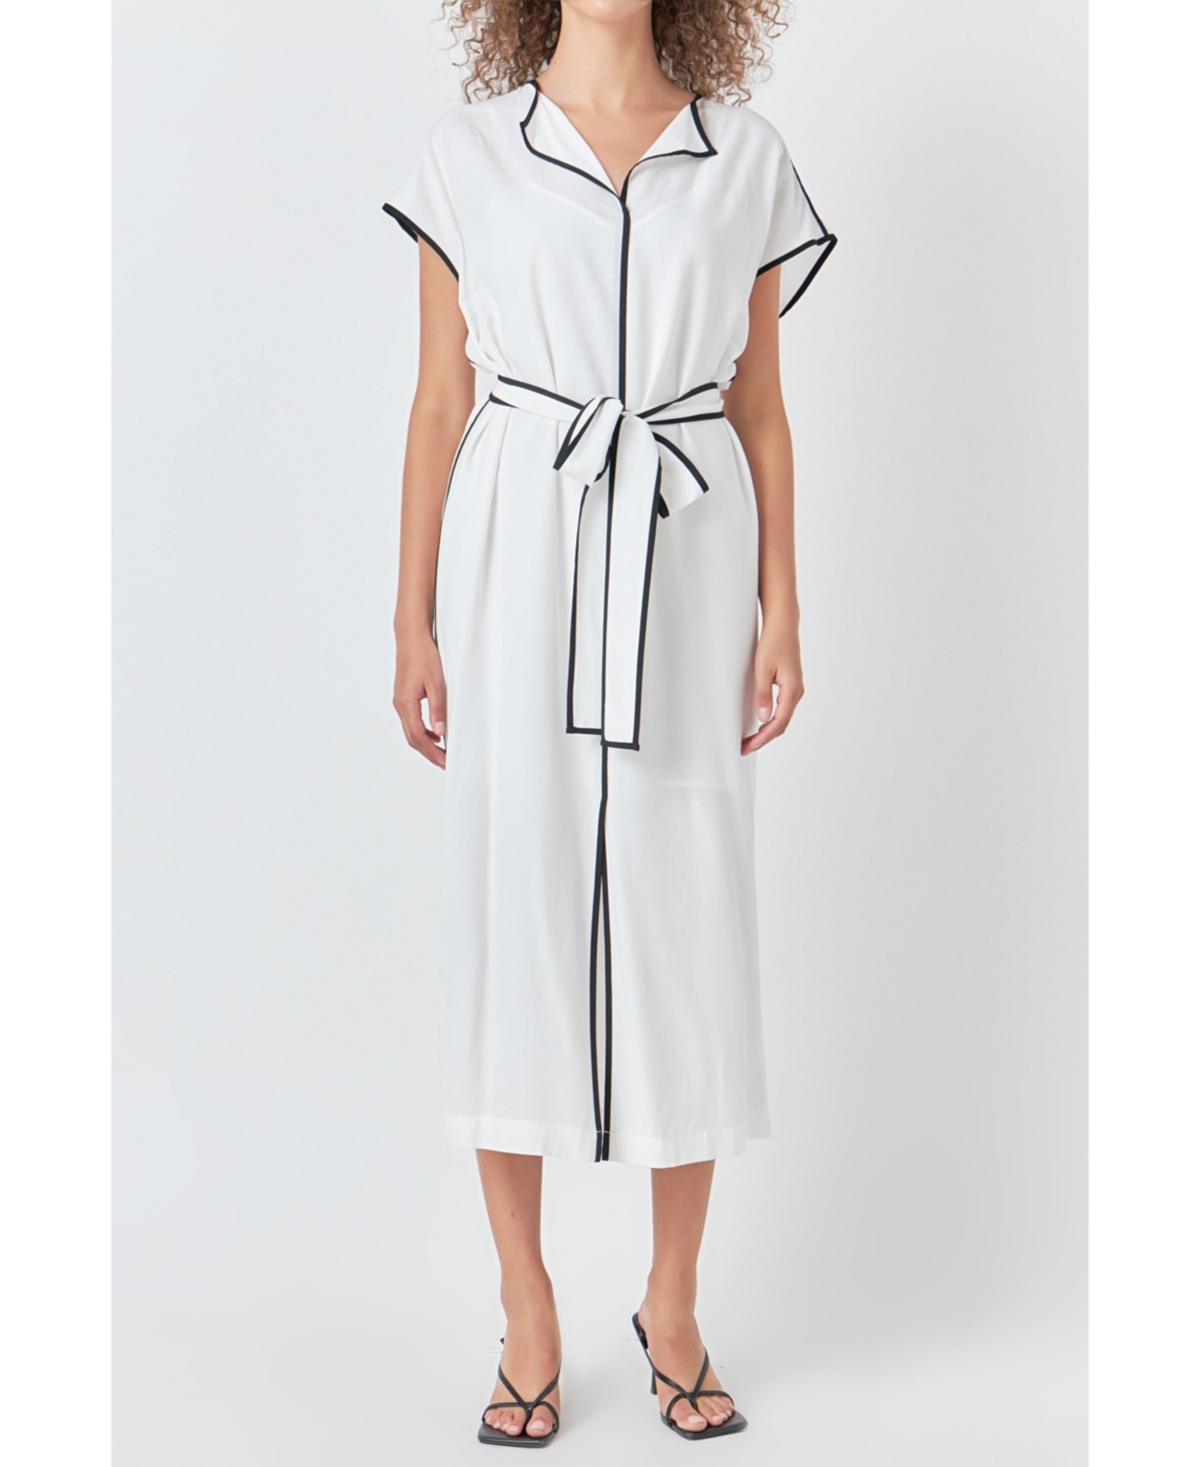 Women's Contrast Binding Belted Midi Dress - White/black